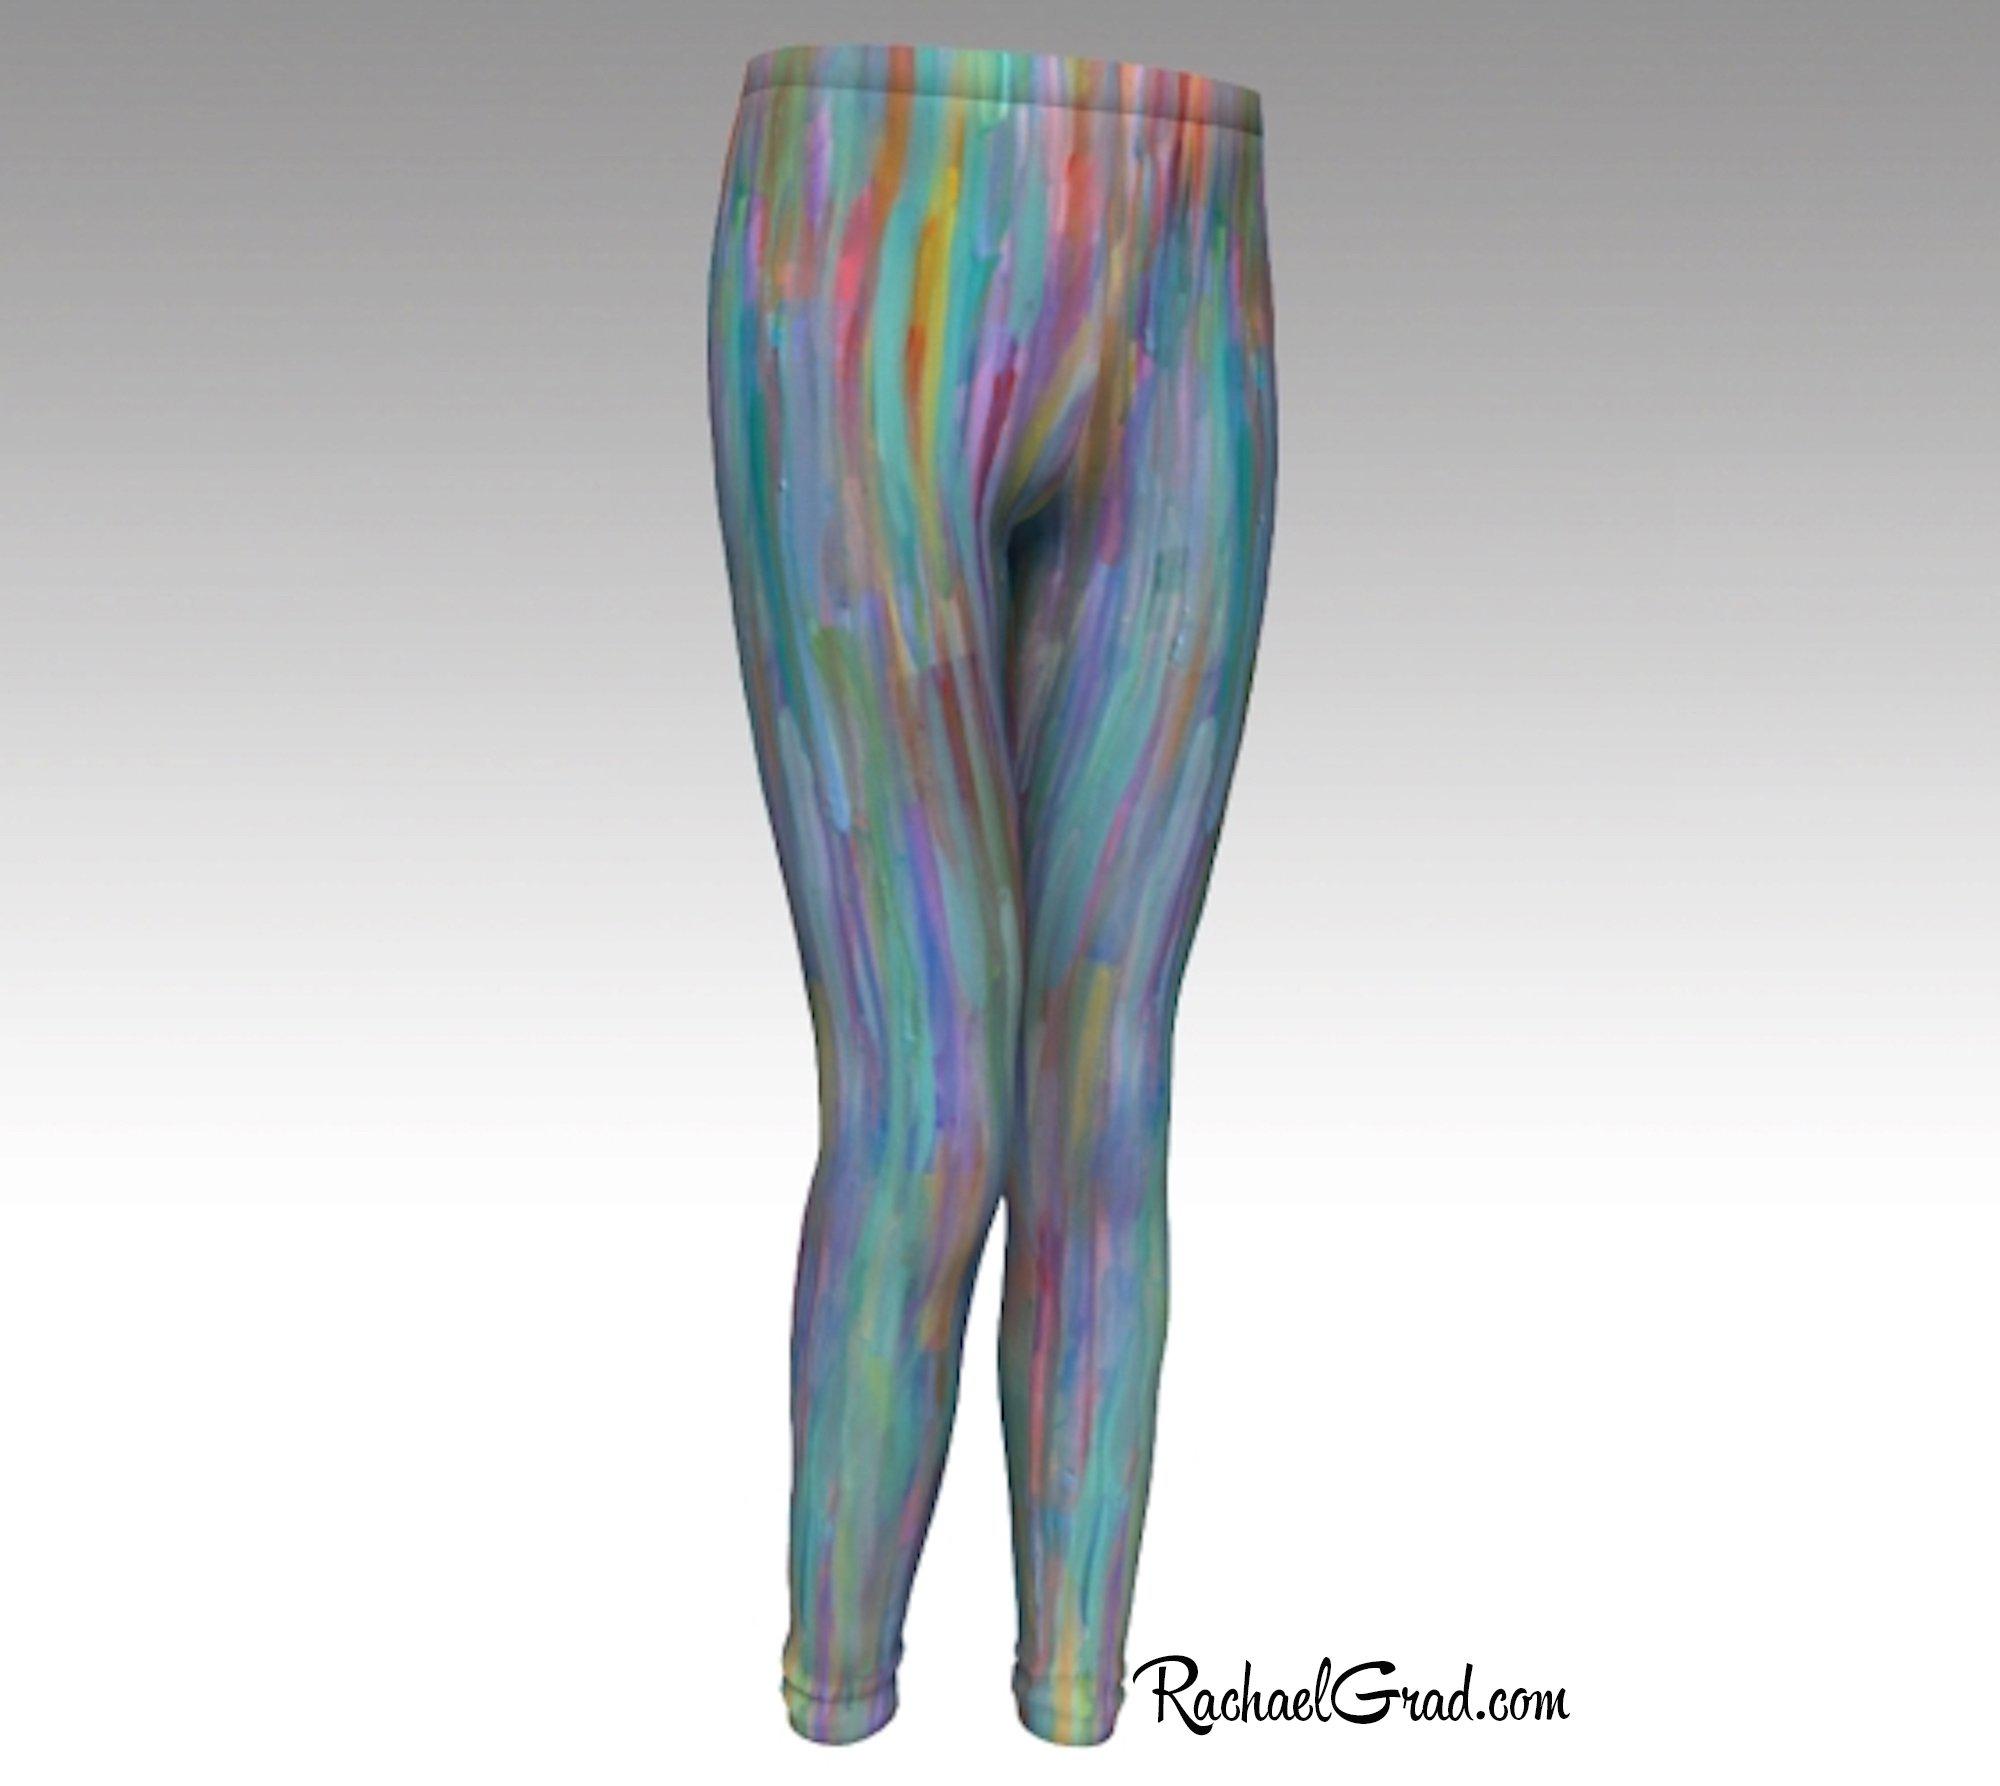 Teal Kids Leggings, Turquoise Pants Art Clothes by Artist Rachael Grad